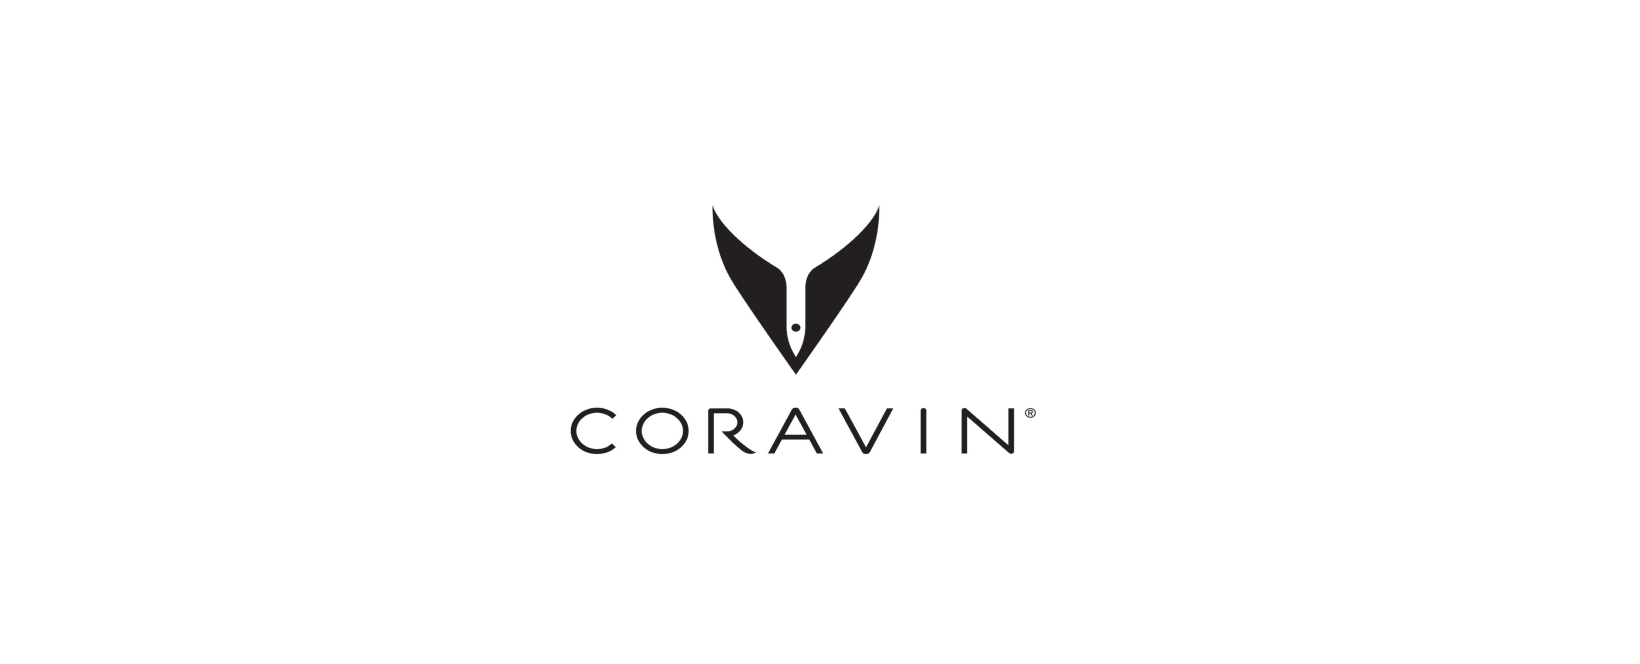 Coravin APAC Coupon Code 2022